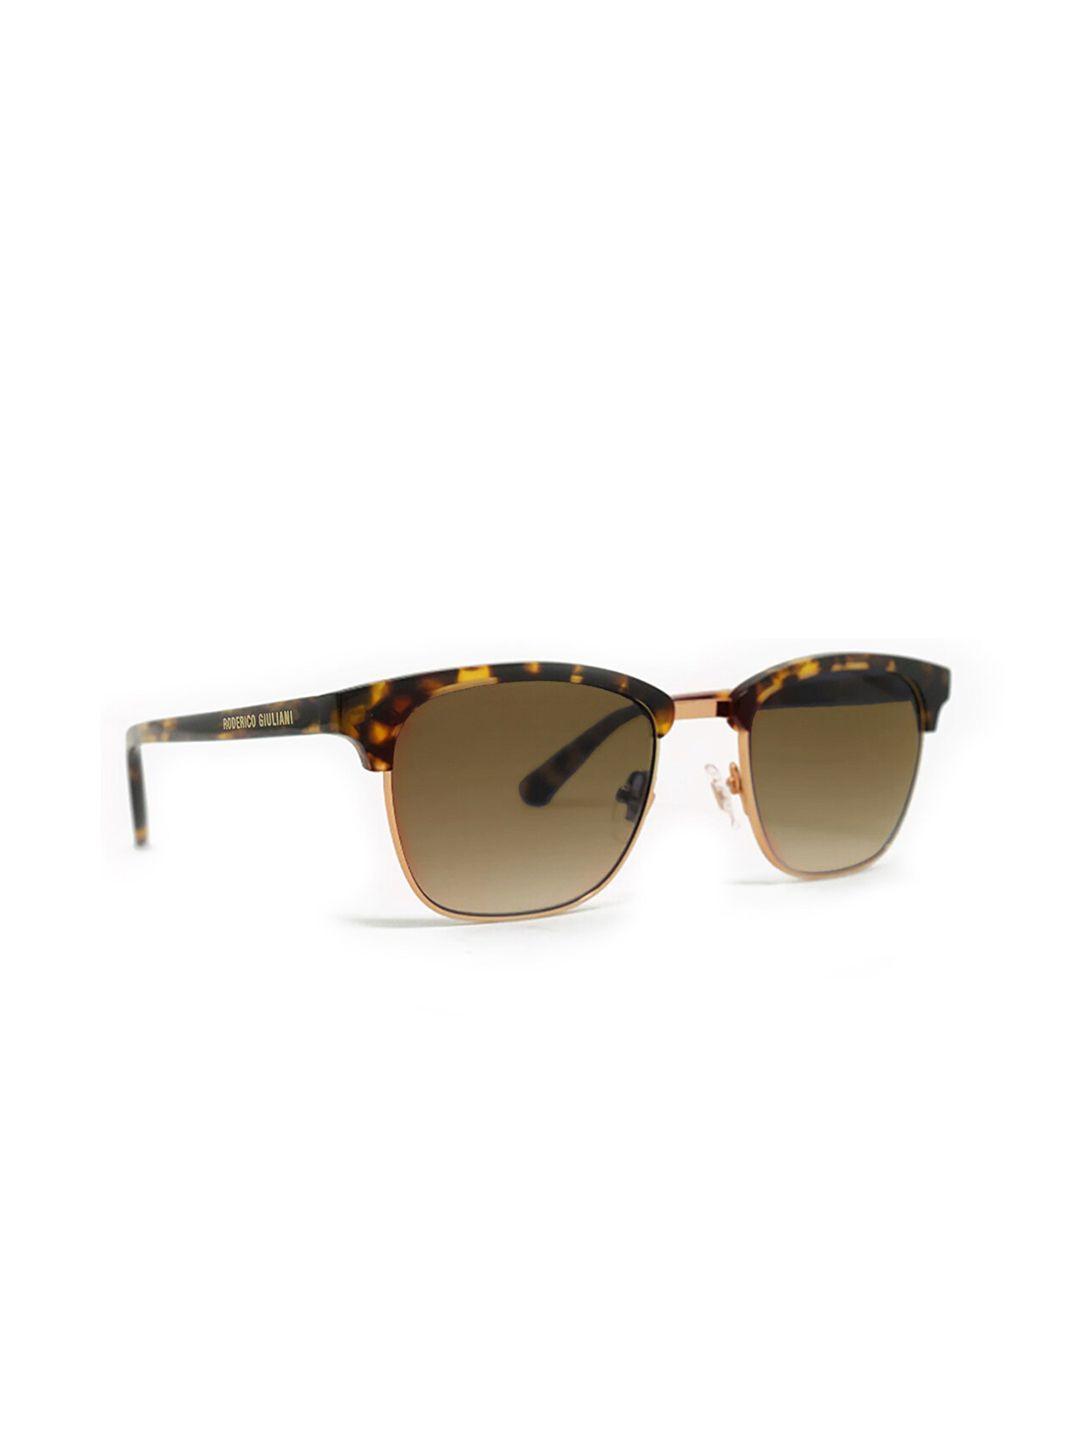 roderico giuliani square full rim sunglasses with polarised and uv protected lens